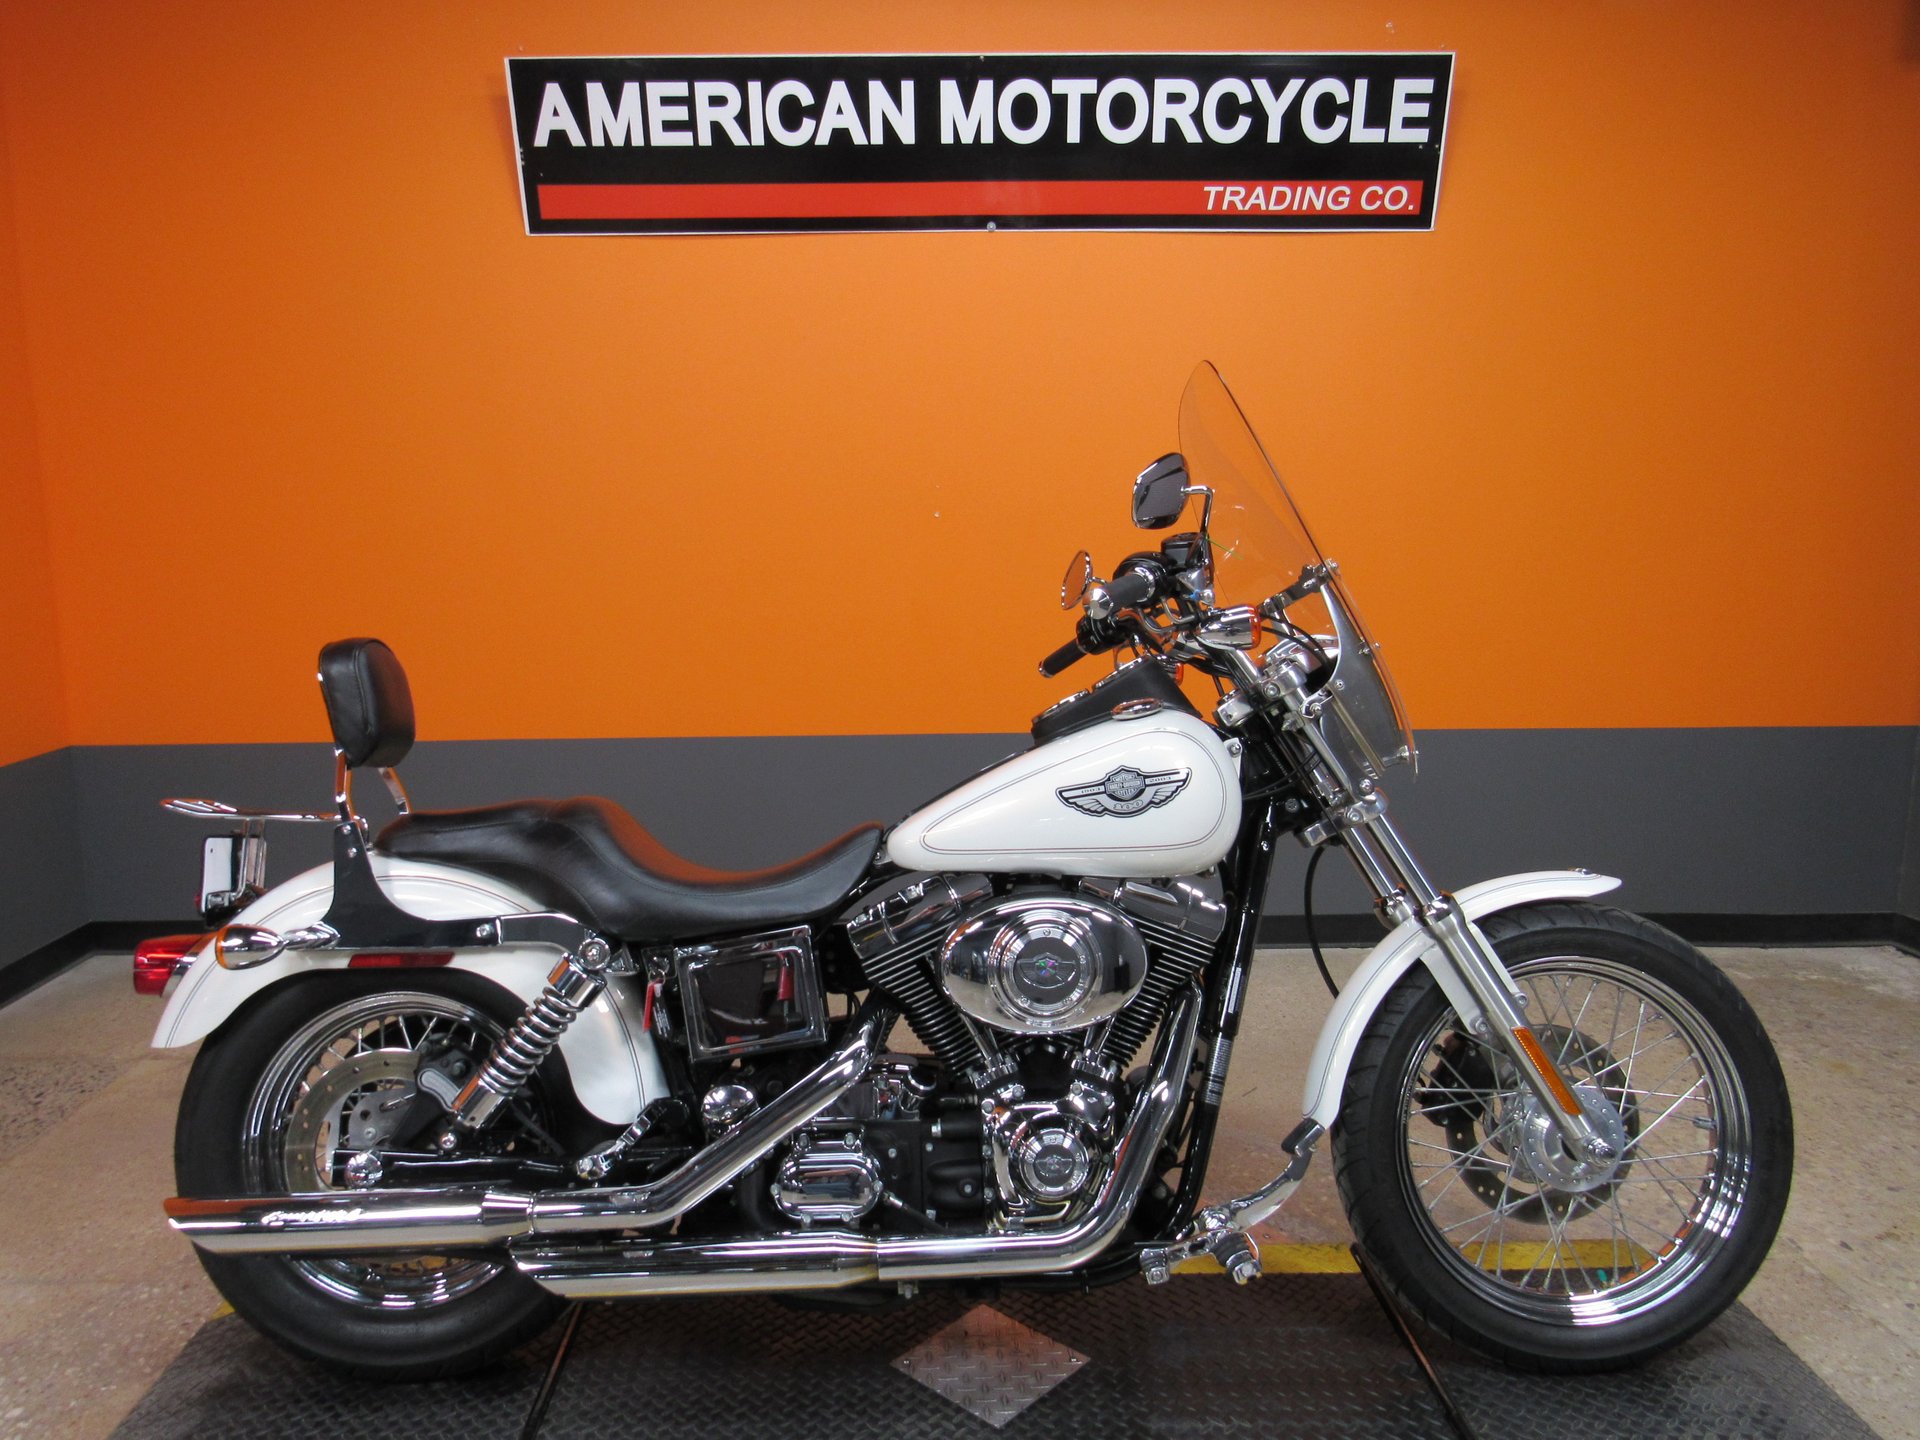 2003 Harley Davidson Dyna Low Rider American Motorcycle Trading Company Used Harley Davidson Motorcycles